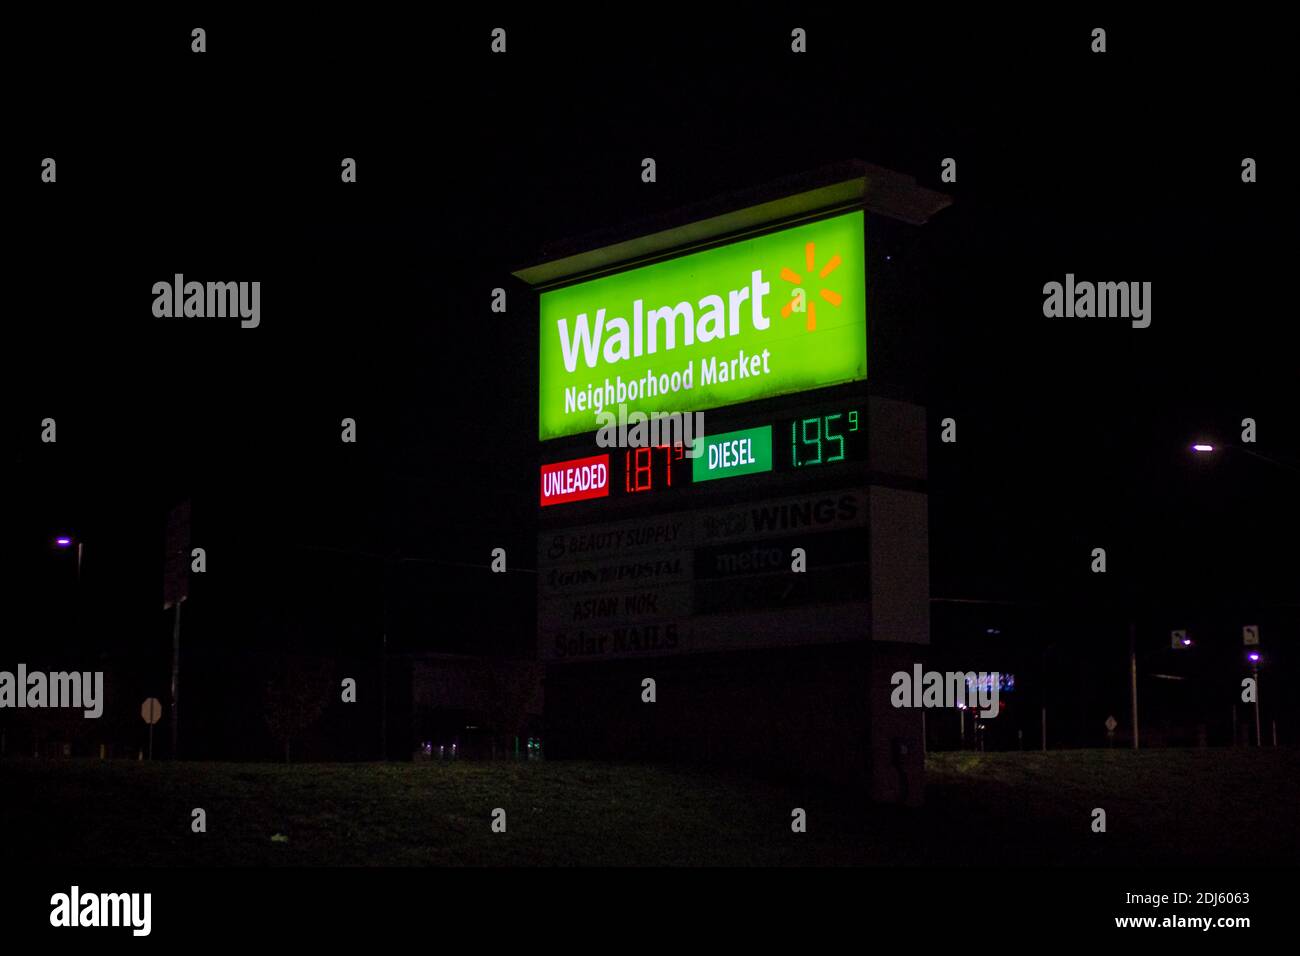 Augusta, Ga USA - 11 04 20: Walmart Neighborhood Market gas street sign at night Stock Photo